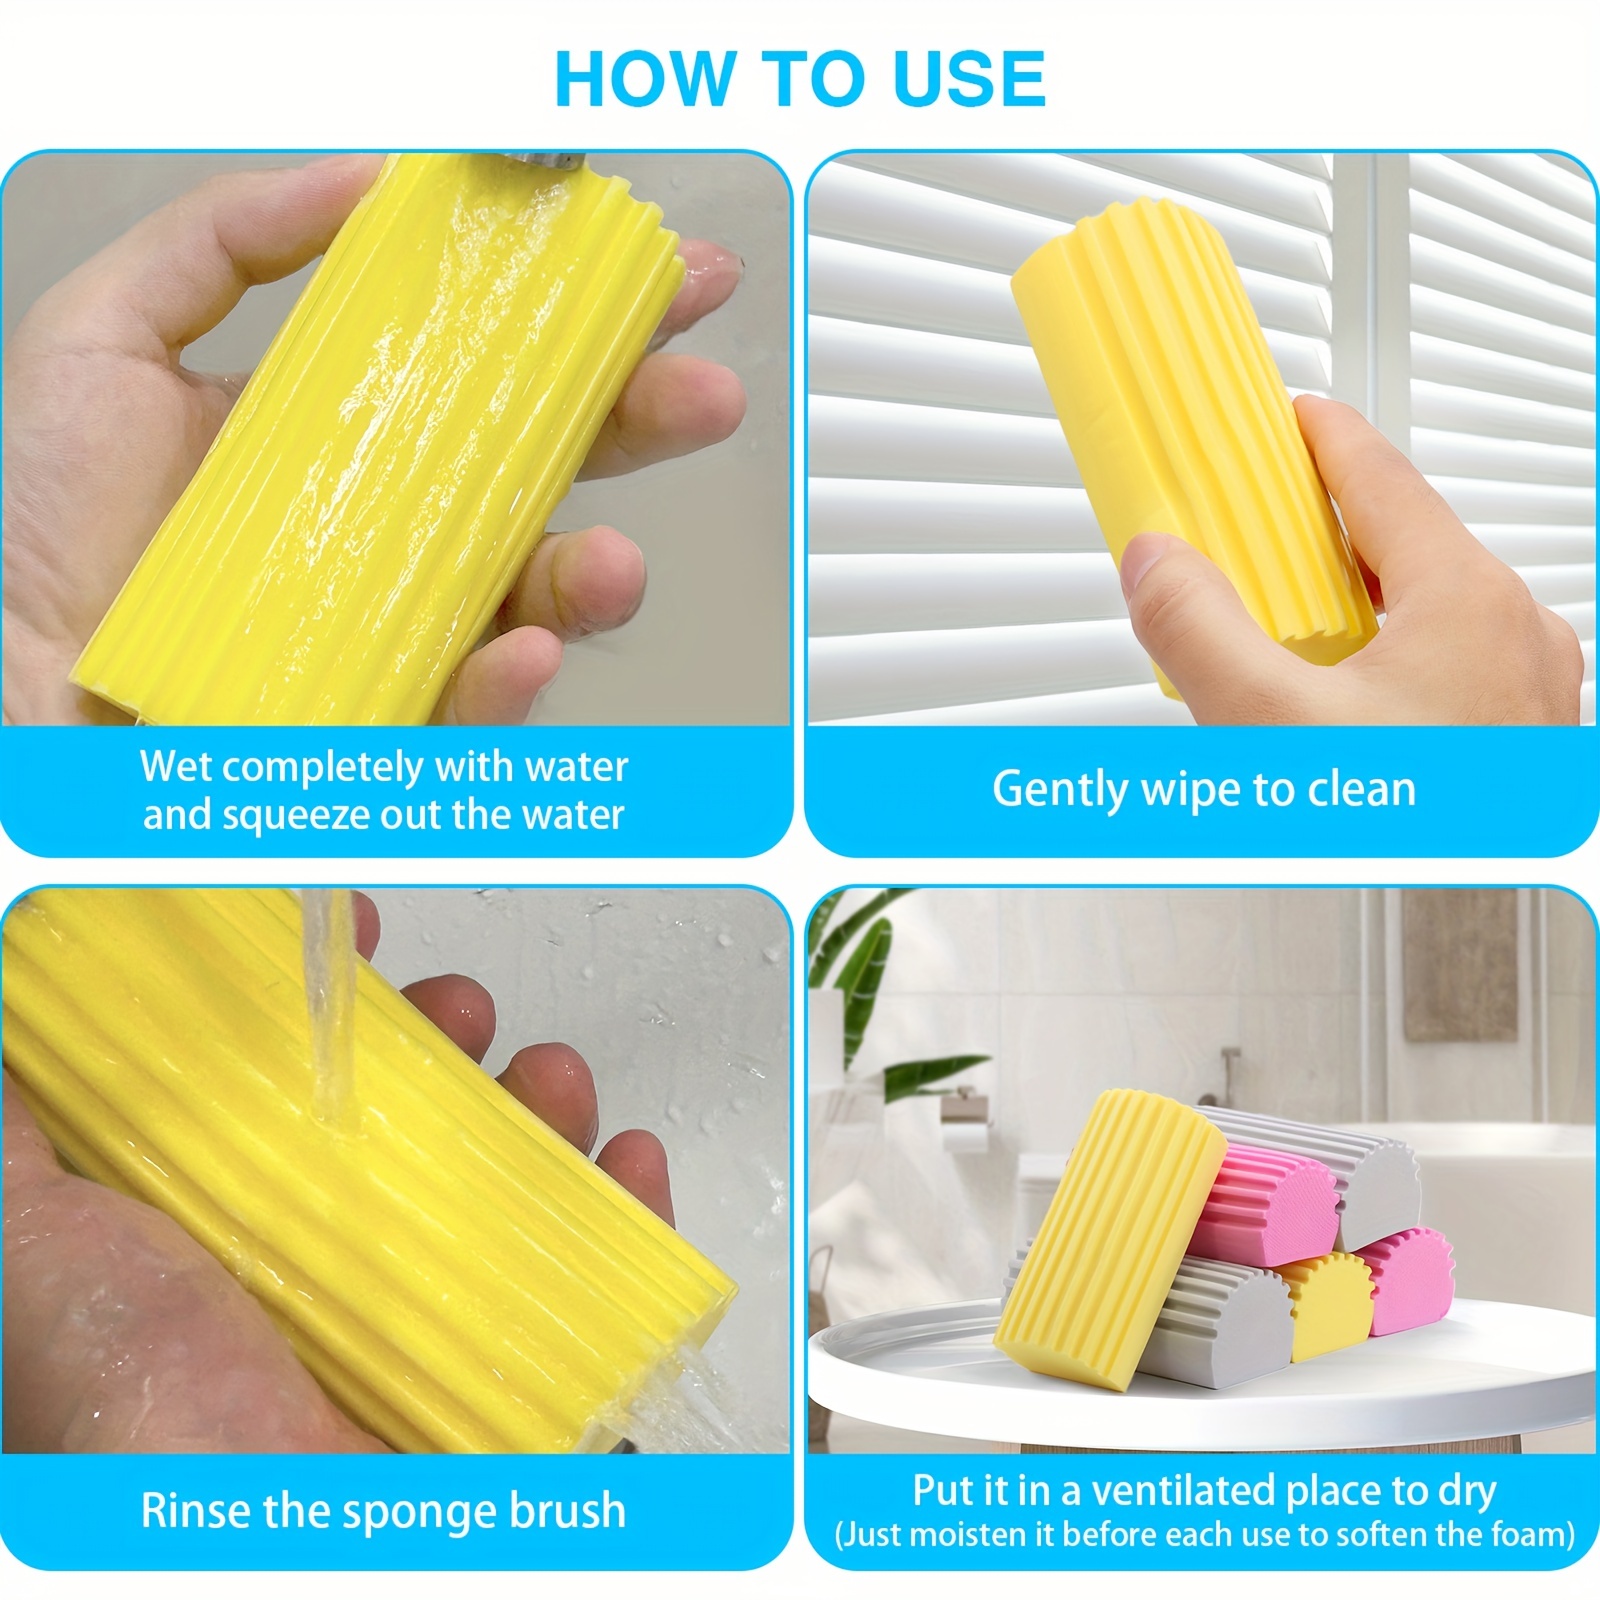 6PCS Magical Dust Cleaning Sponges Damp Clean Duster Sponge Multifunctional  Household Sponge Cleaning Brush